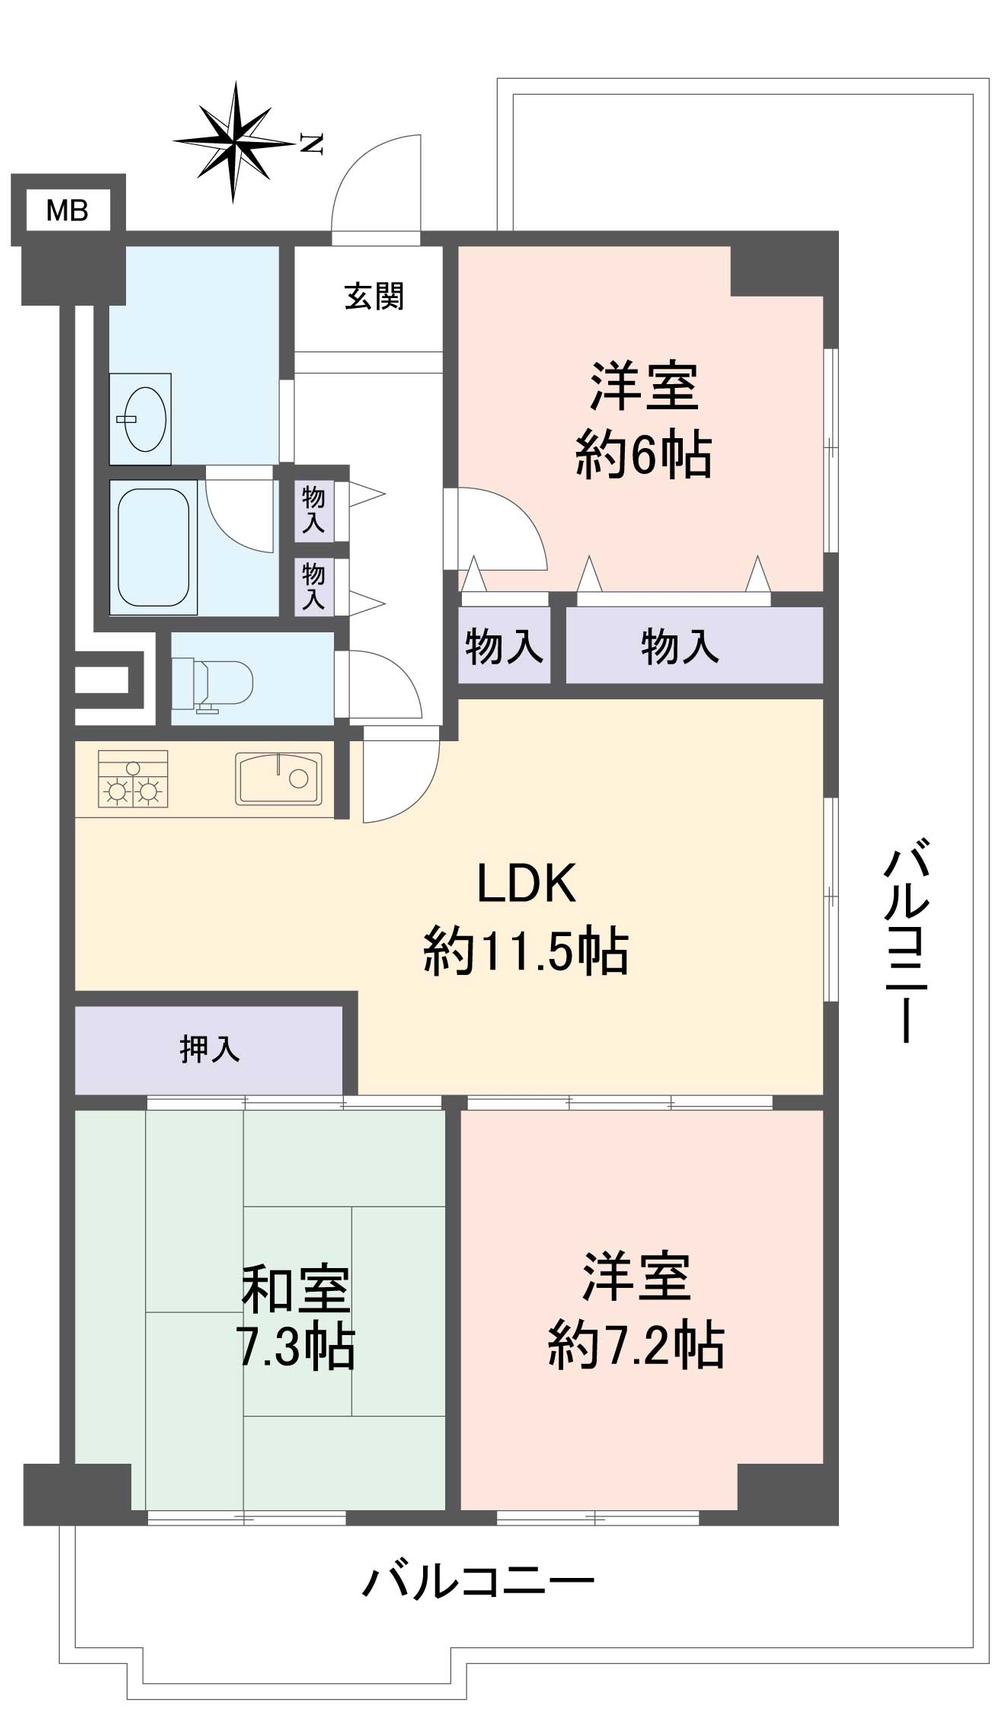 Floor plan. 3LDK, Price 11.8 million yen, Footprint 70.4 sq m , Balcony area 28.33 sq m 3LDK, Price 11.8 million yen, Footprint 70.4 sq m , Balcony area 28.33 sq m